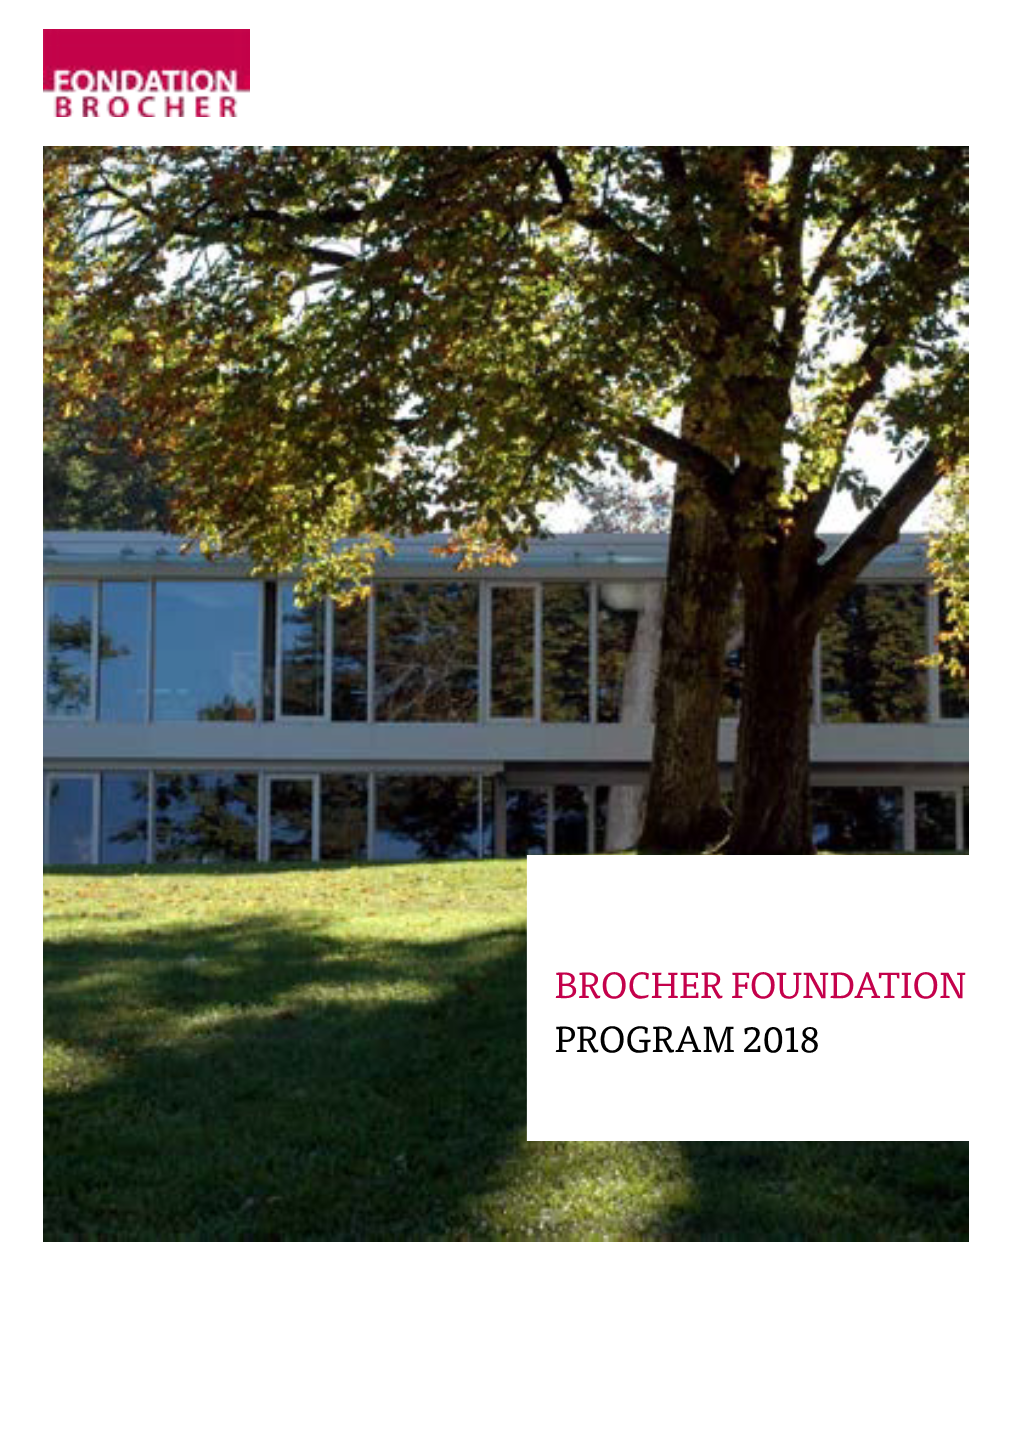 Brocher Foundation Program 2018 Summary